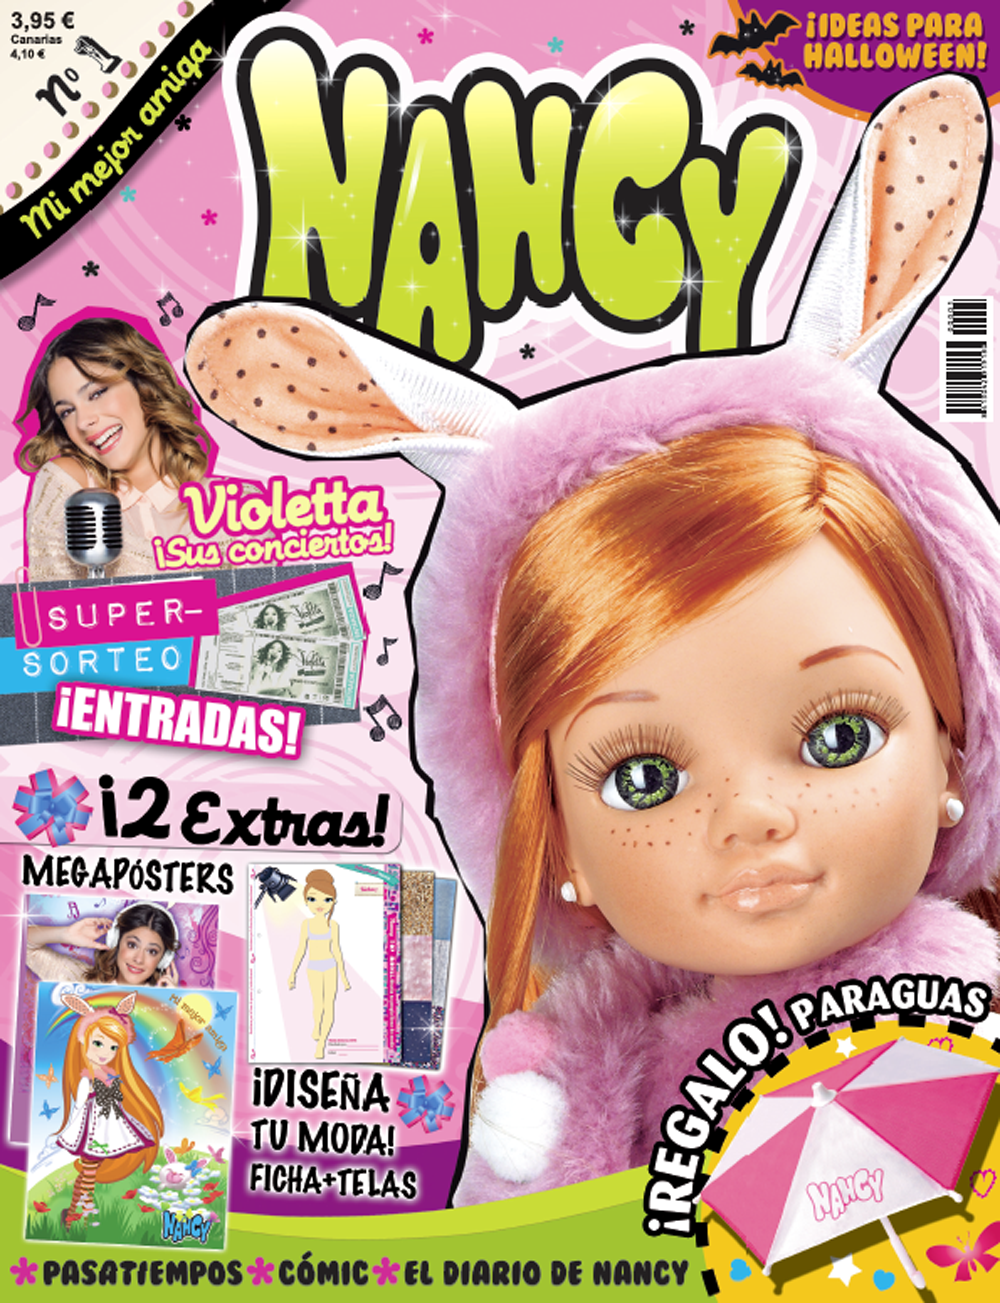 Nancy, otra famosa con revista